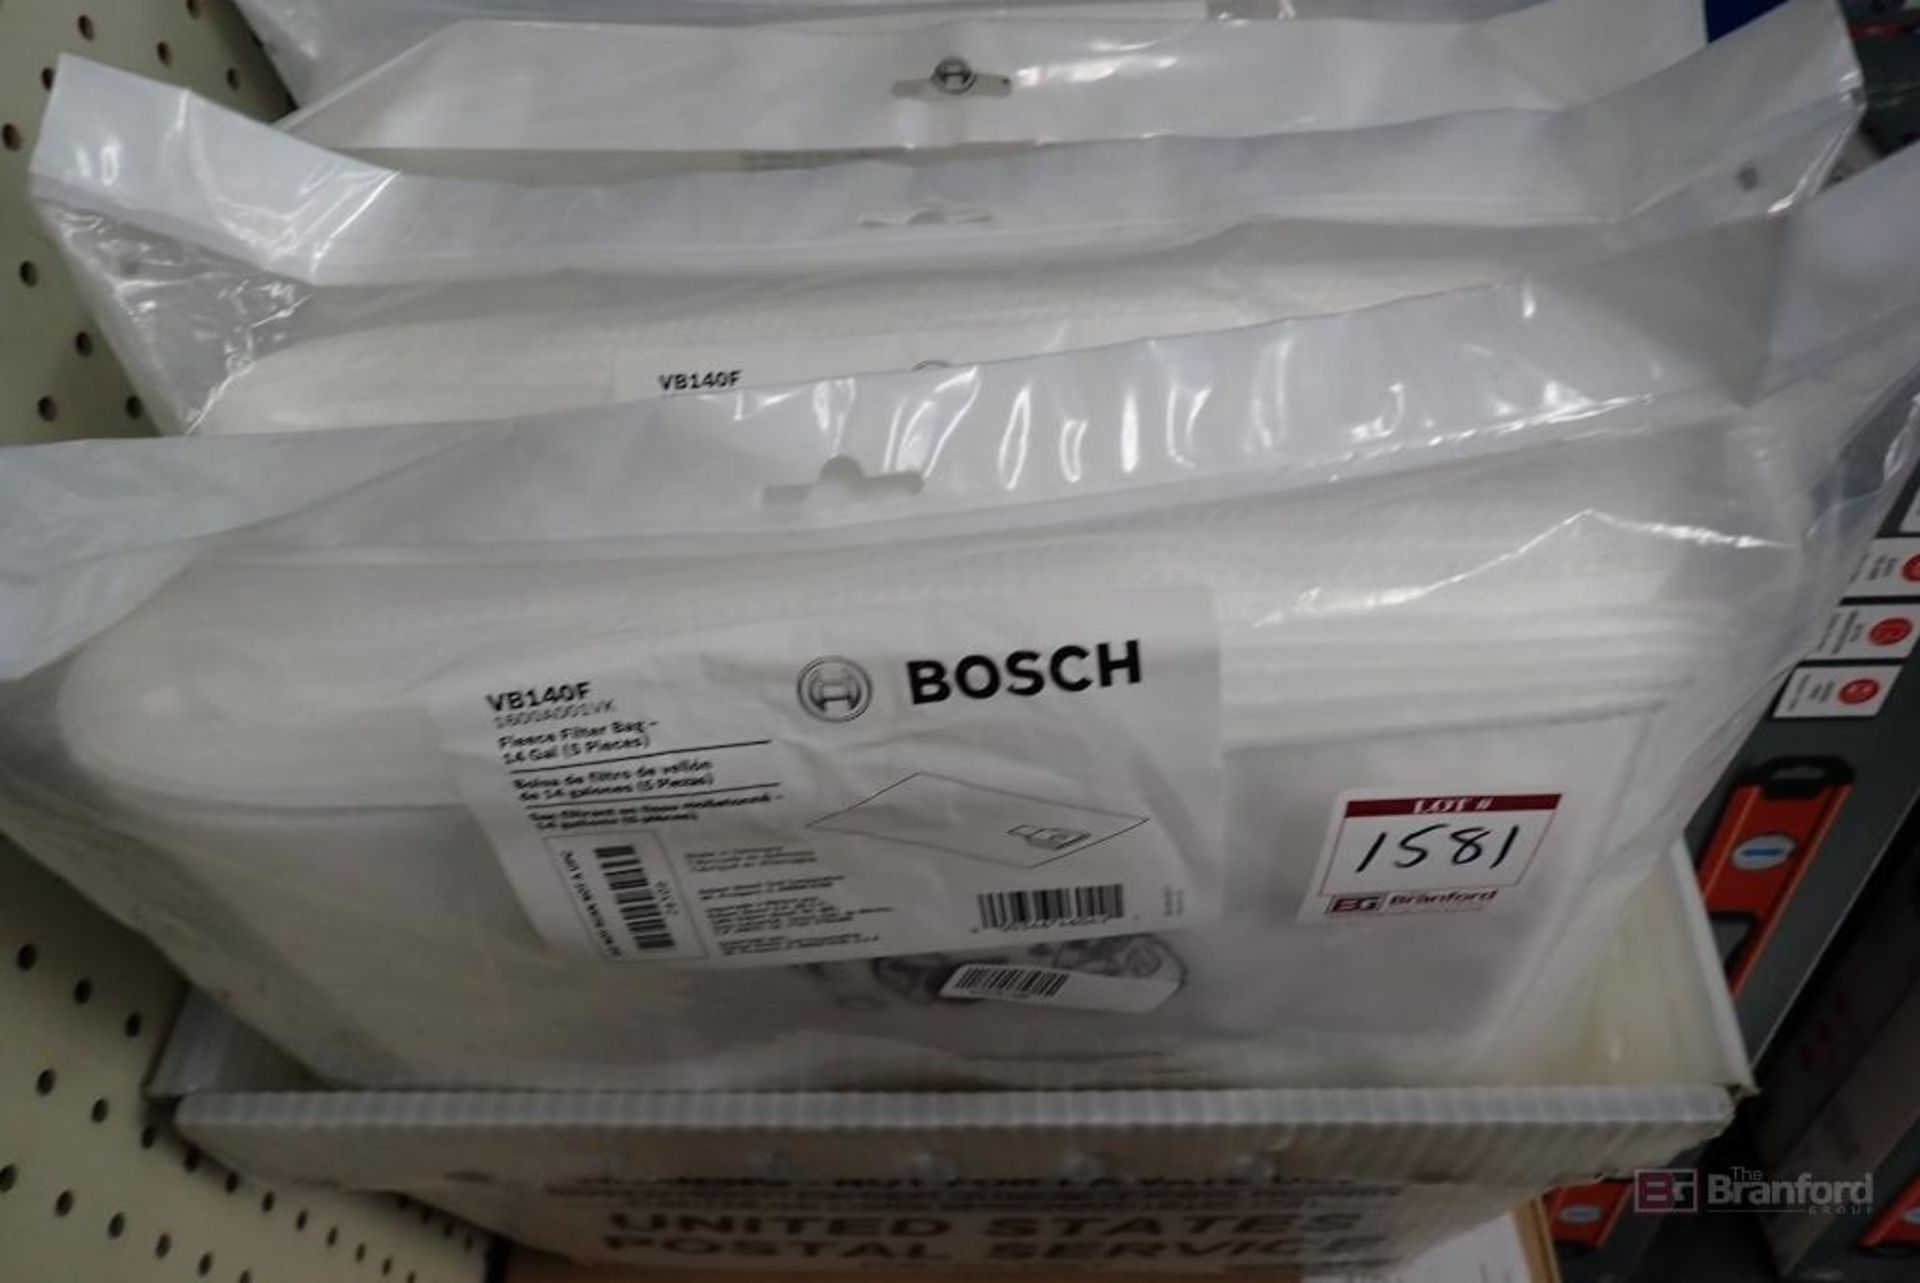 Box Lot of Bosch VB140F-30 Fleece Filter Bags - Image 2 of 3